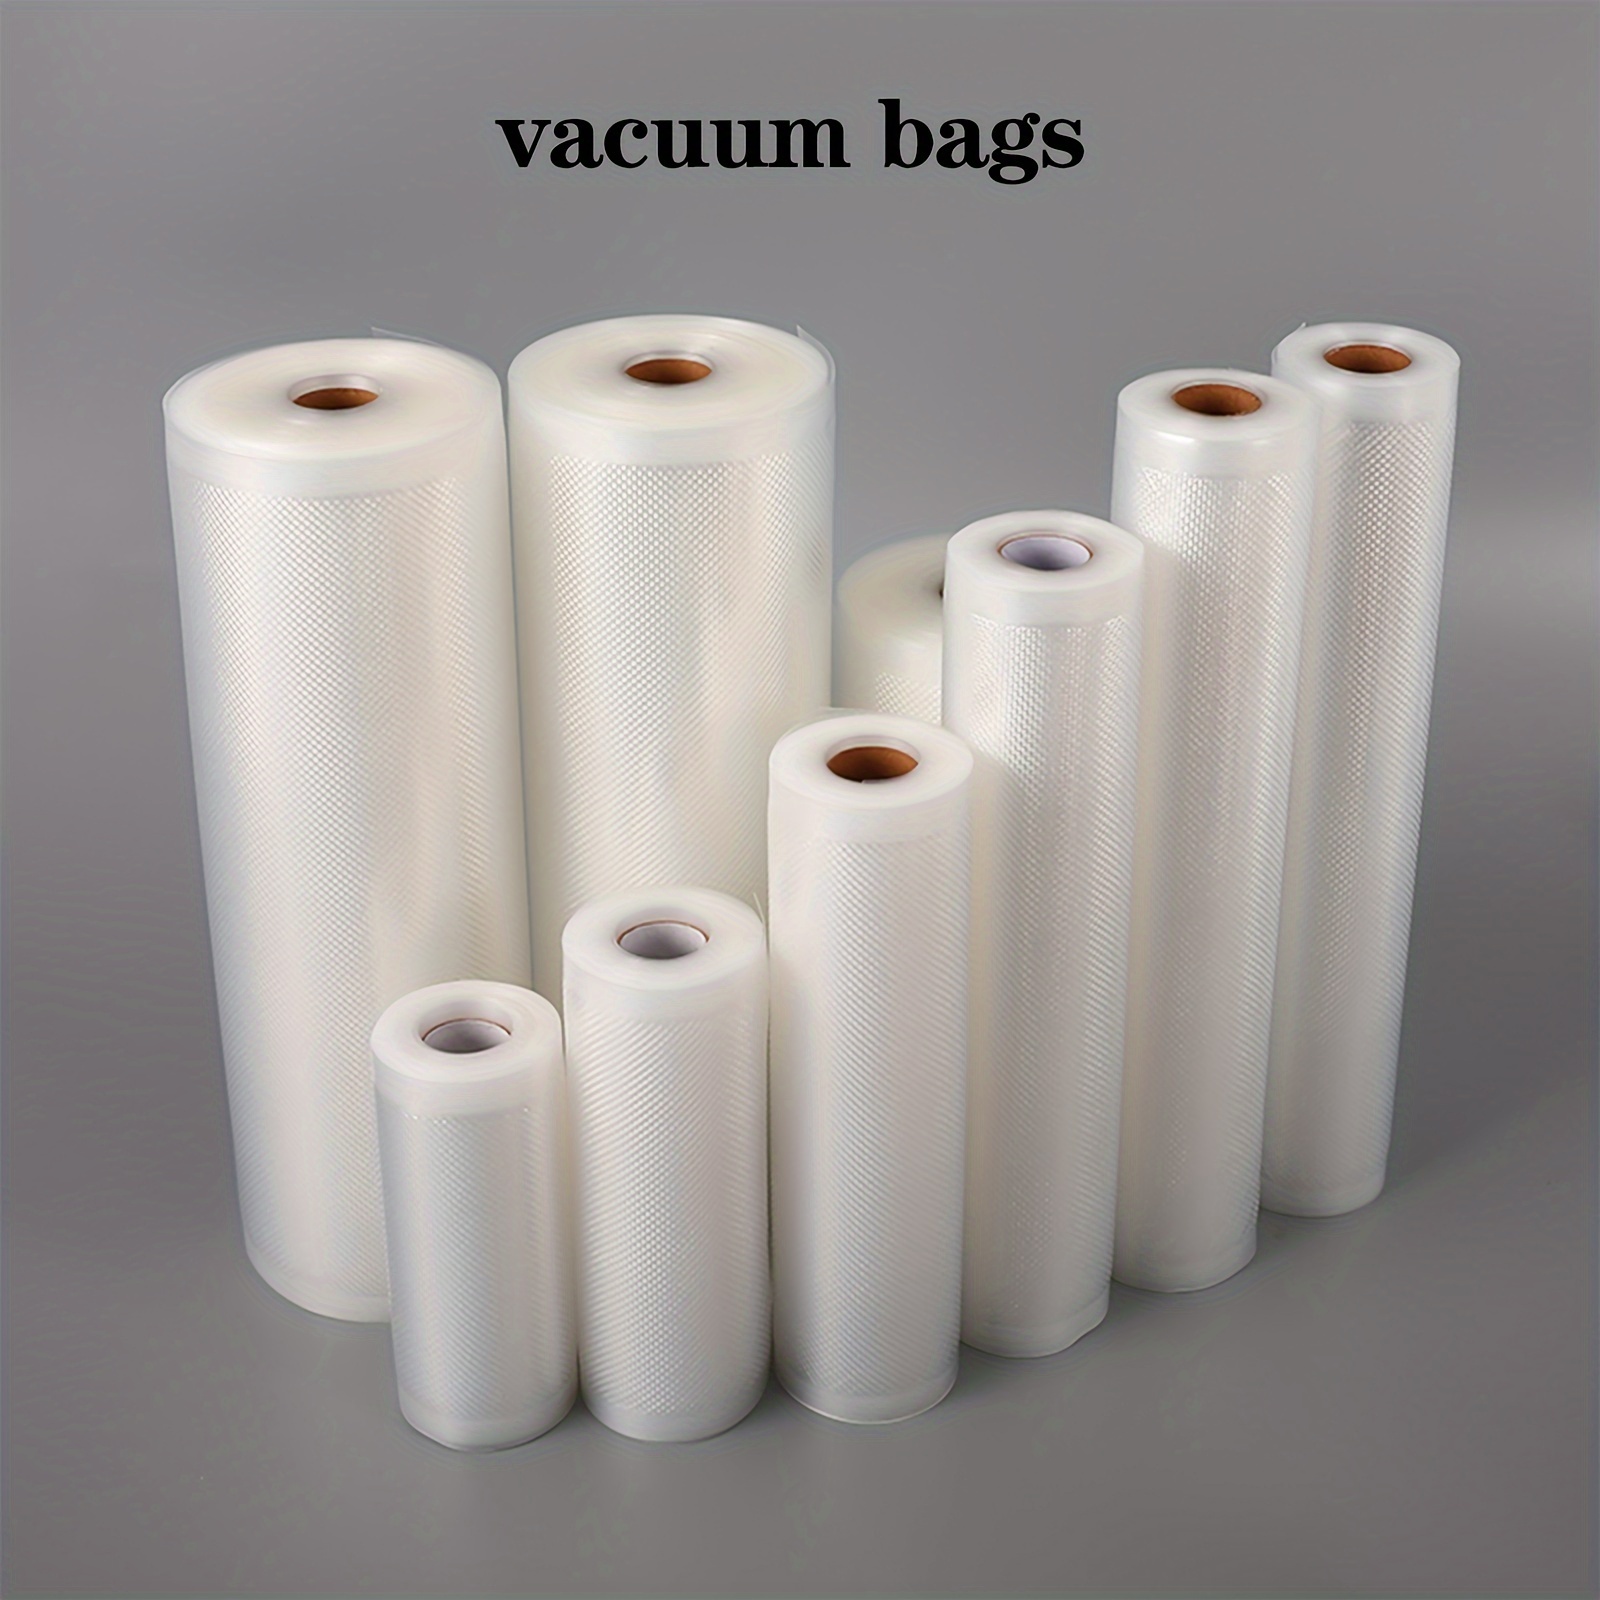 

1 Rolls Vacuum Bags For Food, Food Preservation Sealed Bag, Food Vacuum Sealer Bags For Vac Storage Meal Prep Sous Vide, Storage Bag For Vacuum Packer Food Fresh Long Keeping, Home Kitchen Supplies